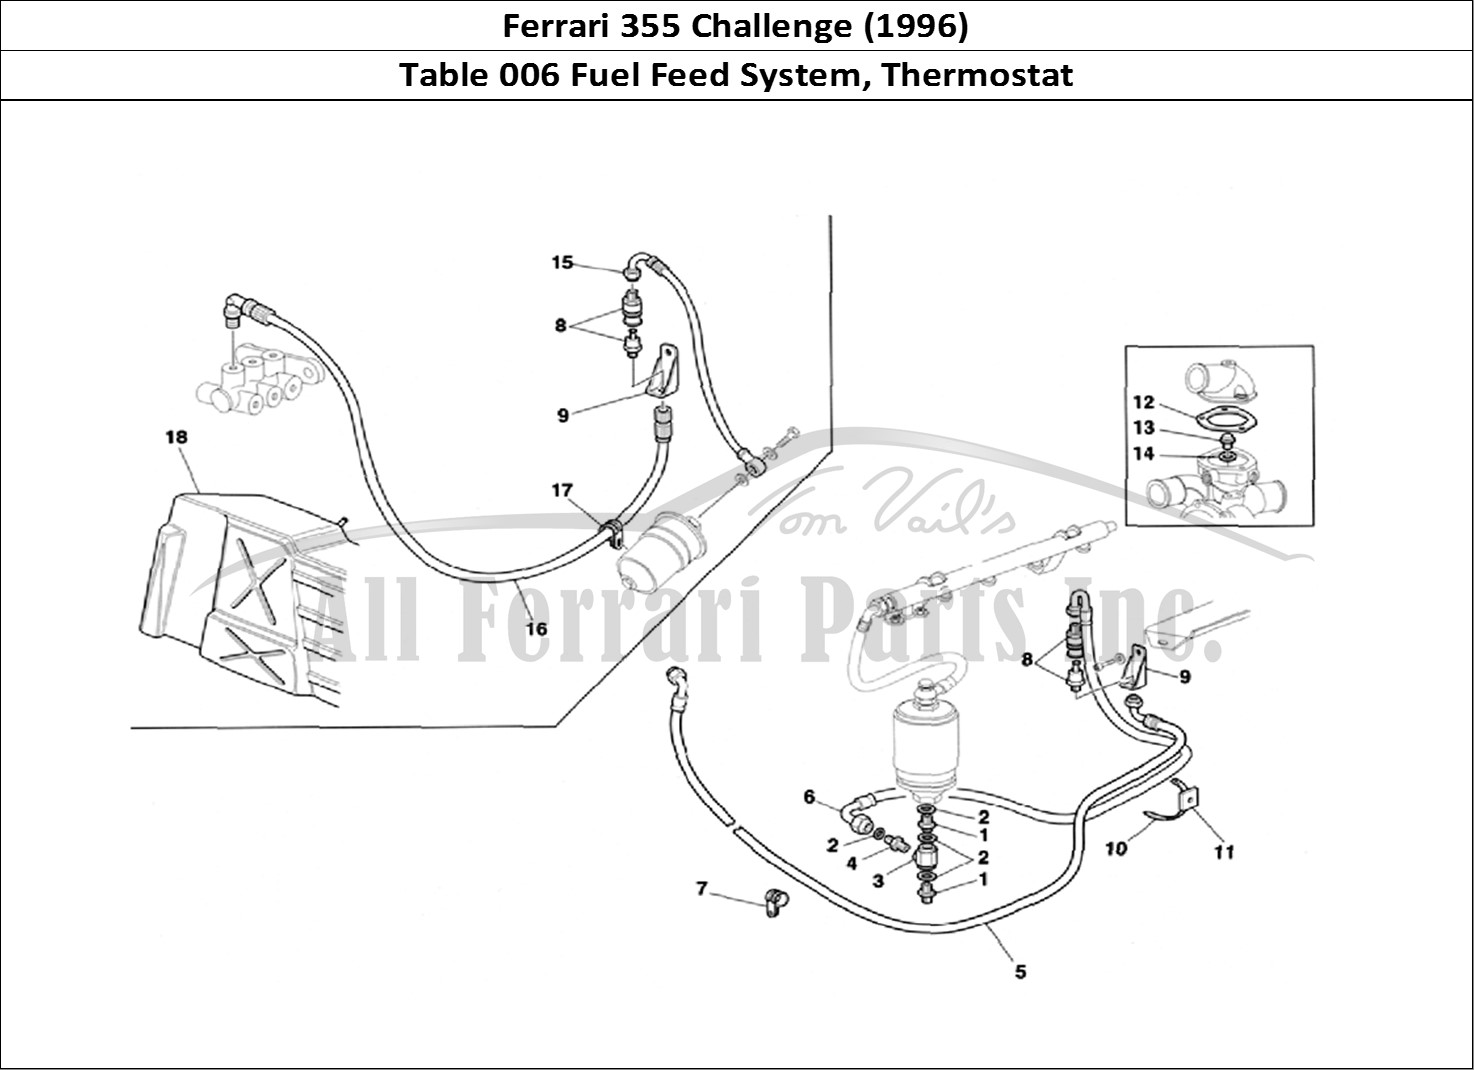 Ferrari Parts Ferrari 355 Challenge (1996) Page 006 Fuel Feed System - Thermo